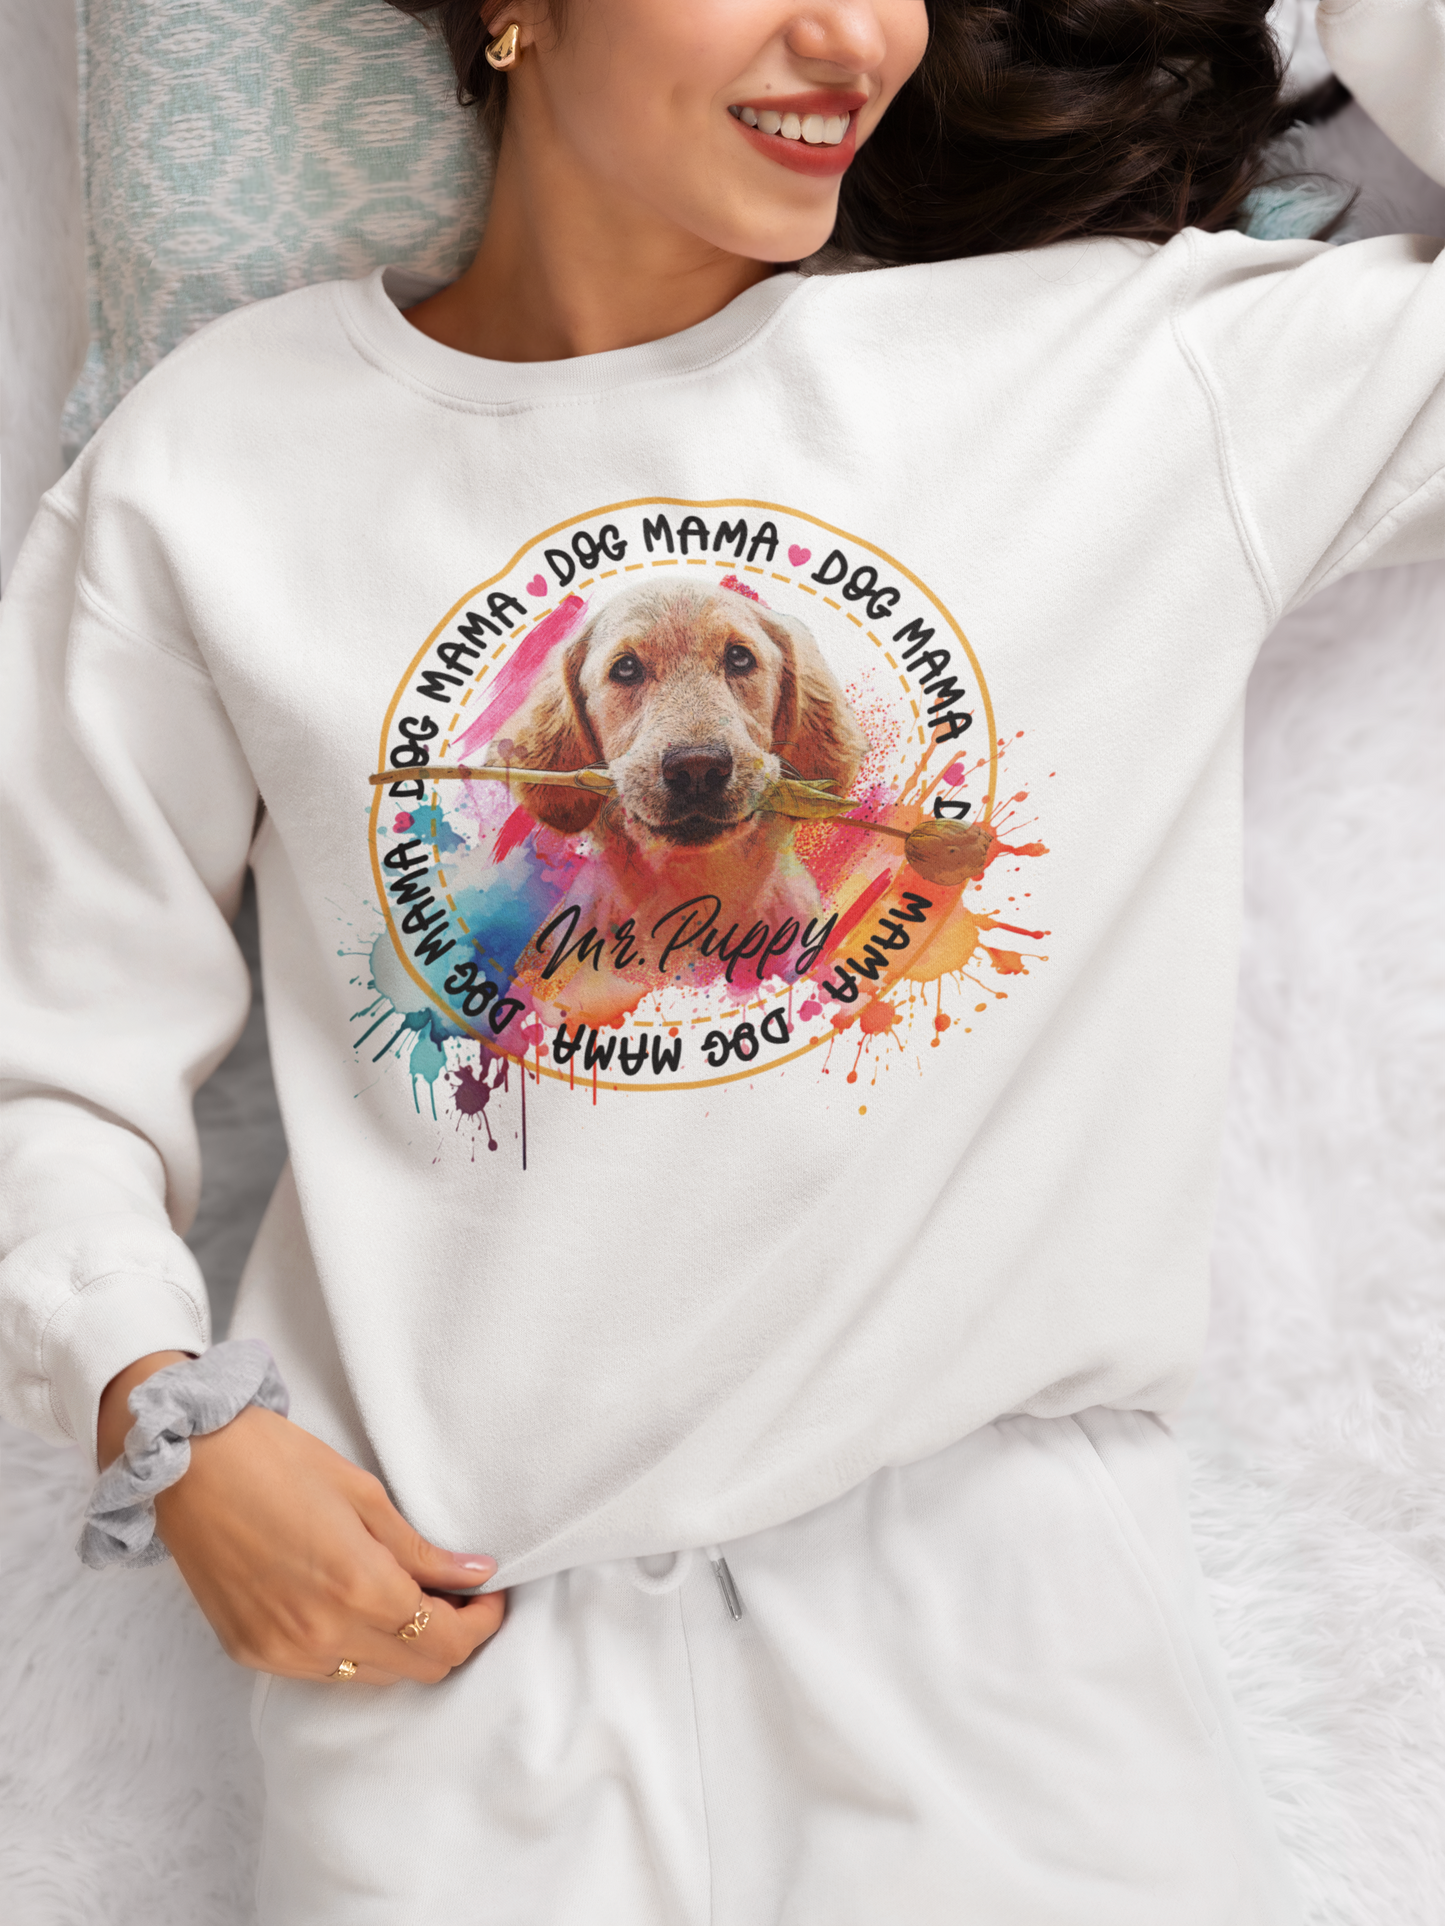 Dog Mom Shirt, Dog Mama Shirt, Cute Dog Paw Shirt, Personalized Dog's Name Shirt, Dog Mom Shirt For Mother's Day, Pet Mom Custom Name Shirt, Colorful Glitter Shirt, Custom Your Dog's Name Shirt, Dog Mom Gift Idea Shirt, Shirt For Who Loves Dog (Ver 2 )